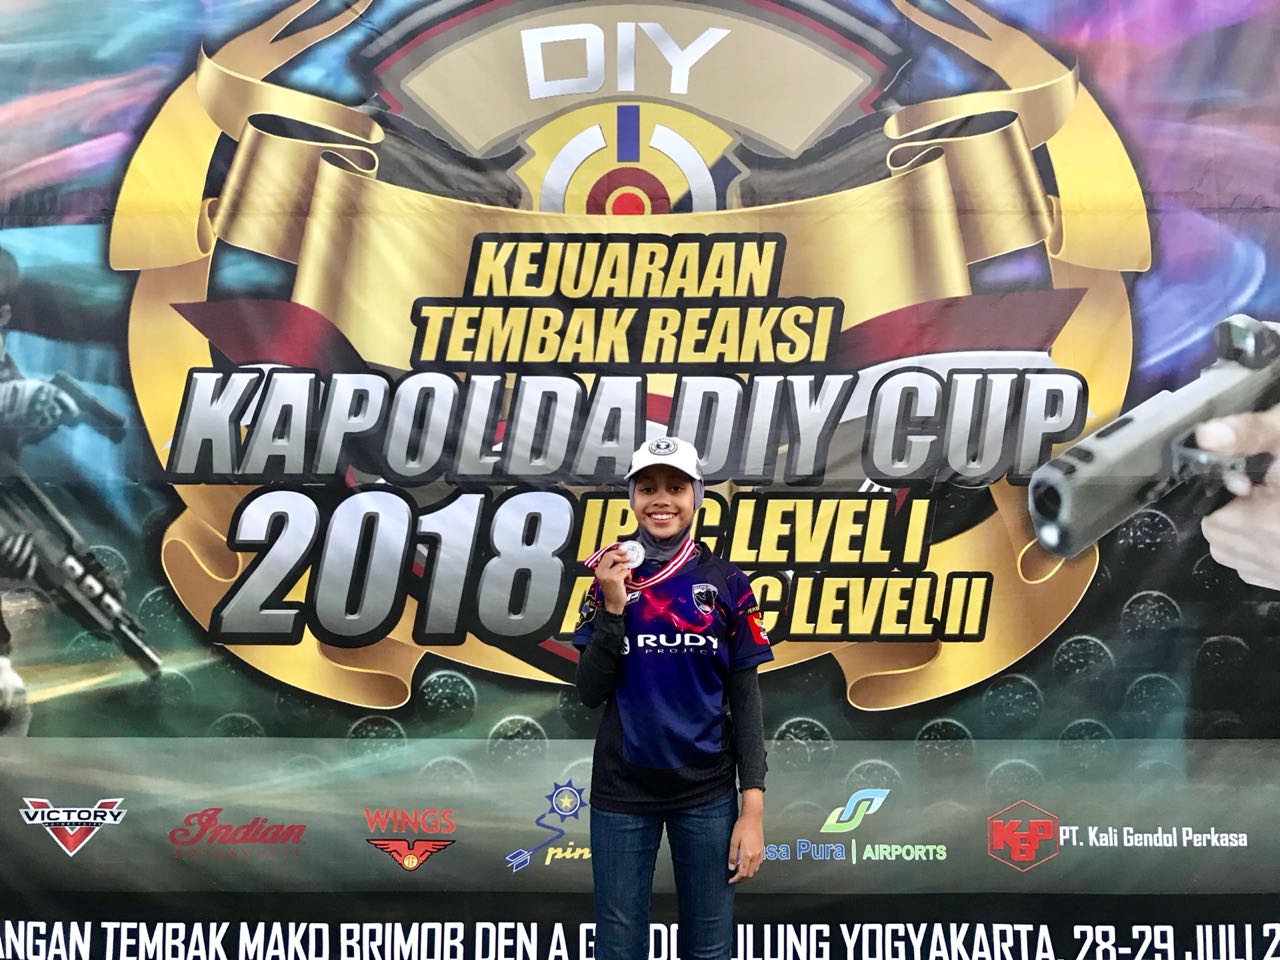 Siswi SMP Muhammadiyah PK Solo Juara 2 Kejuaraan Menembak Kapolda DIY CUP 2018